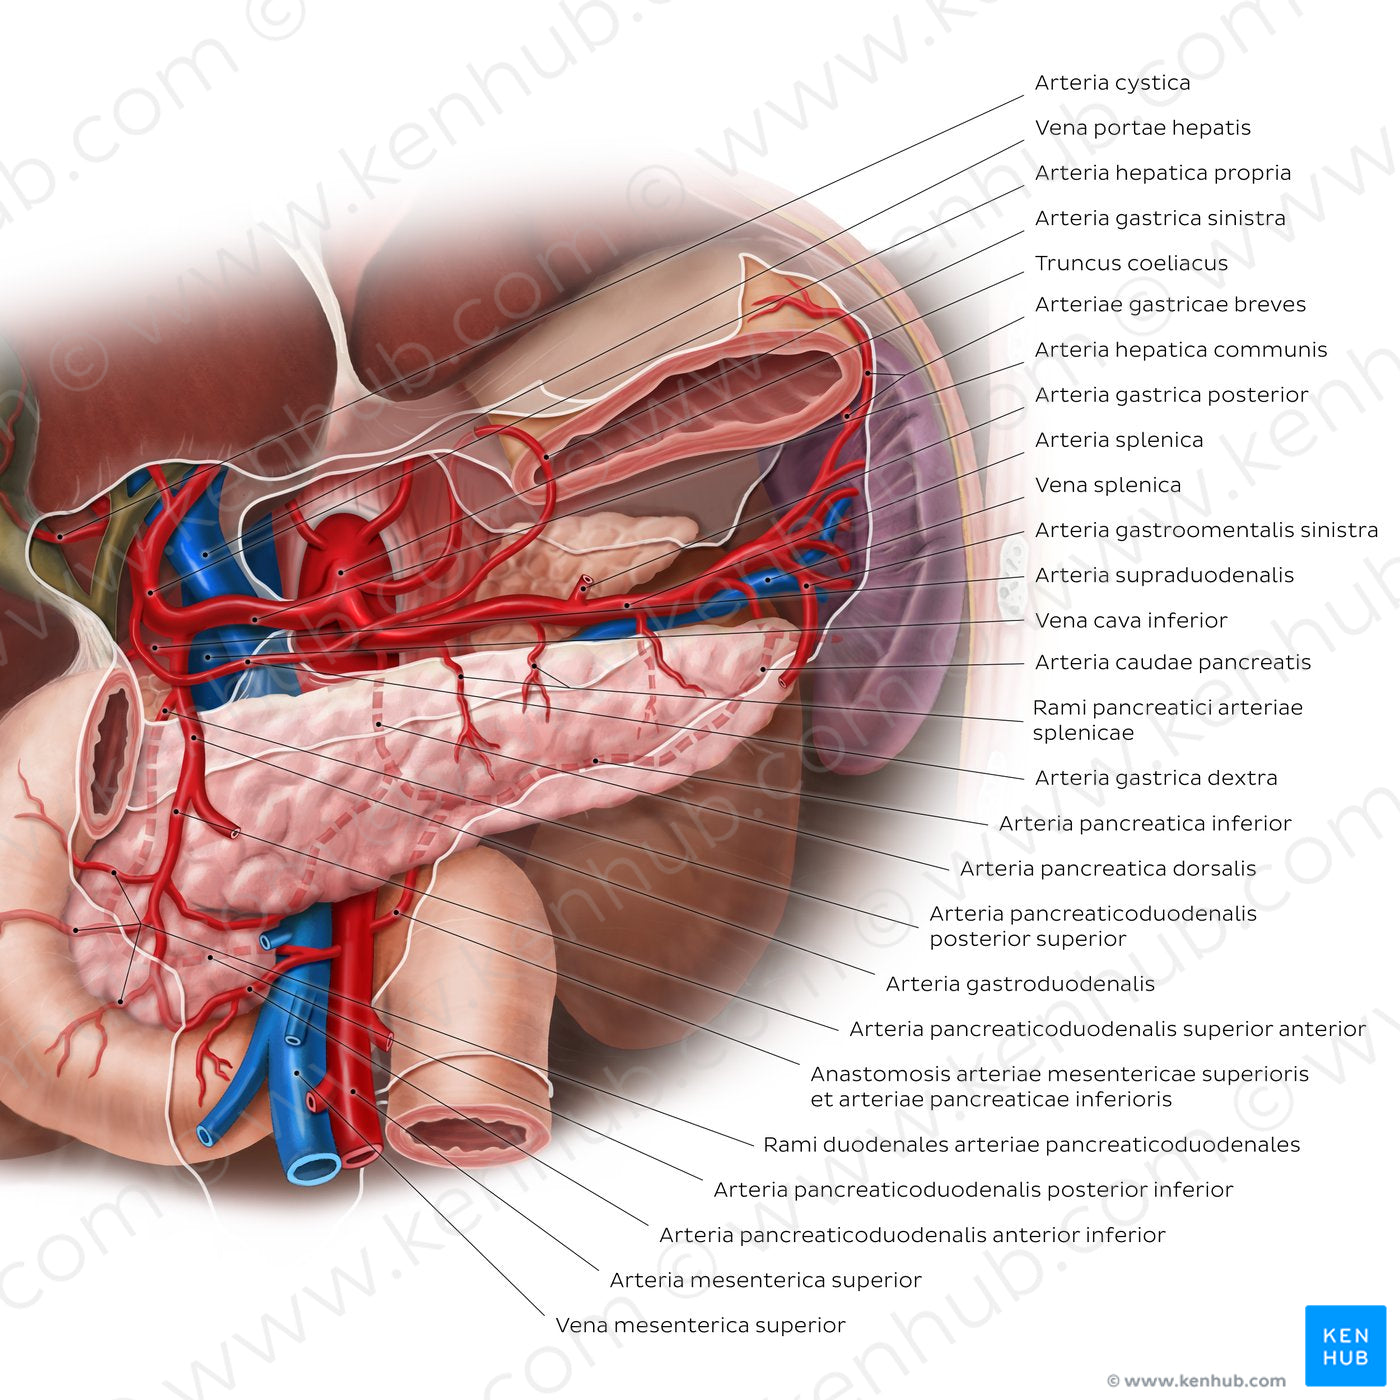 Arteries of the pancreas, duodenum and spleen (Latin)